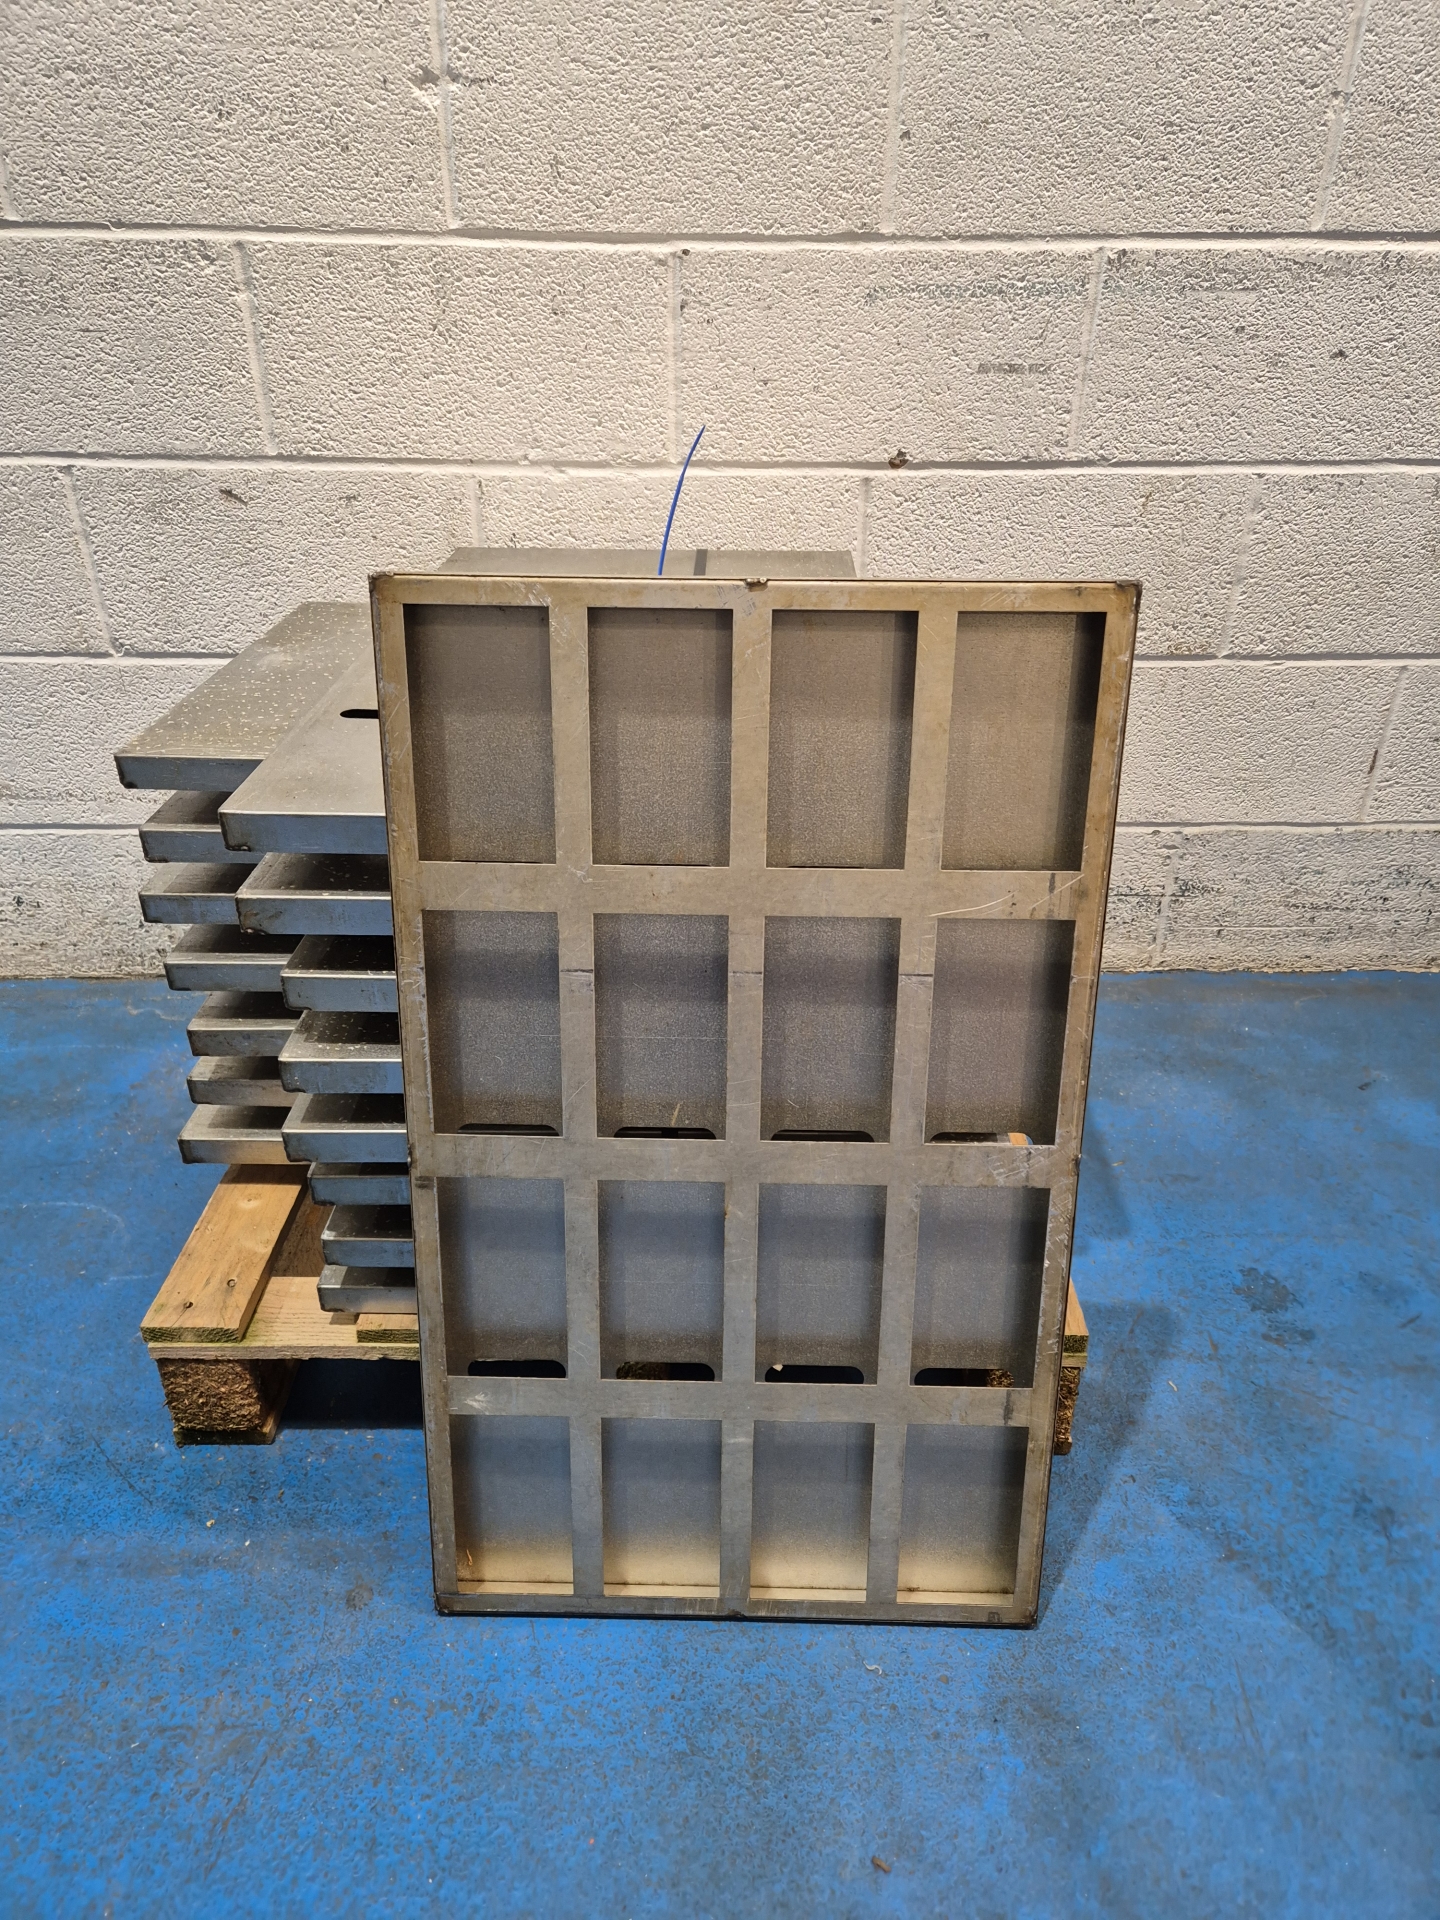 AluminIum Baking Trays with 4 x 4 Oblong Inserts